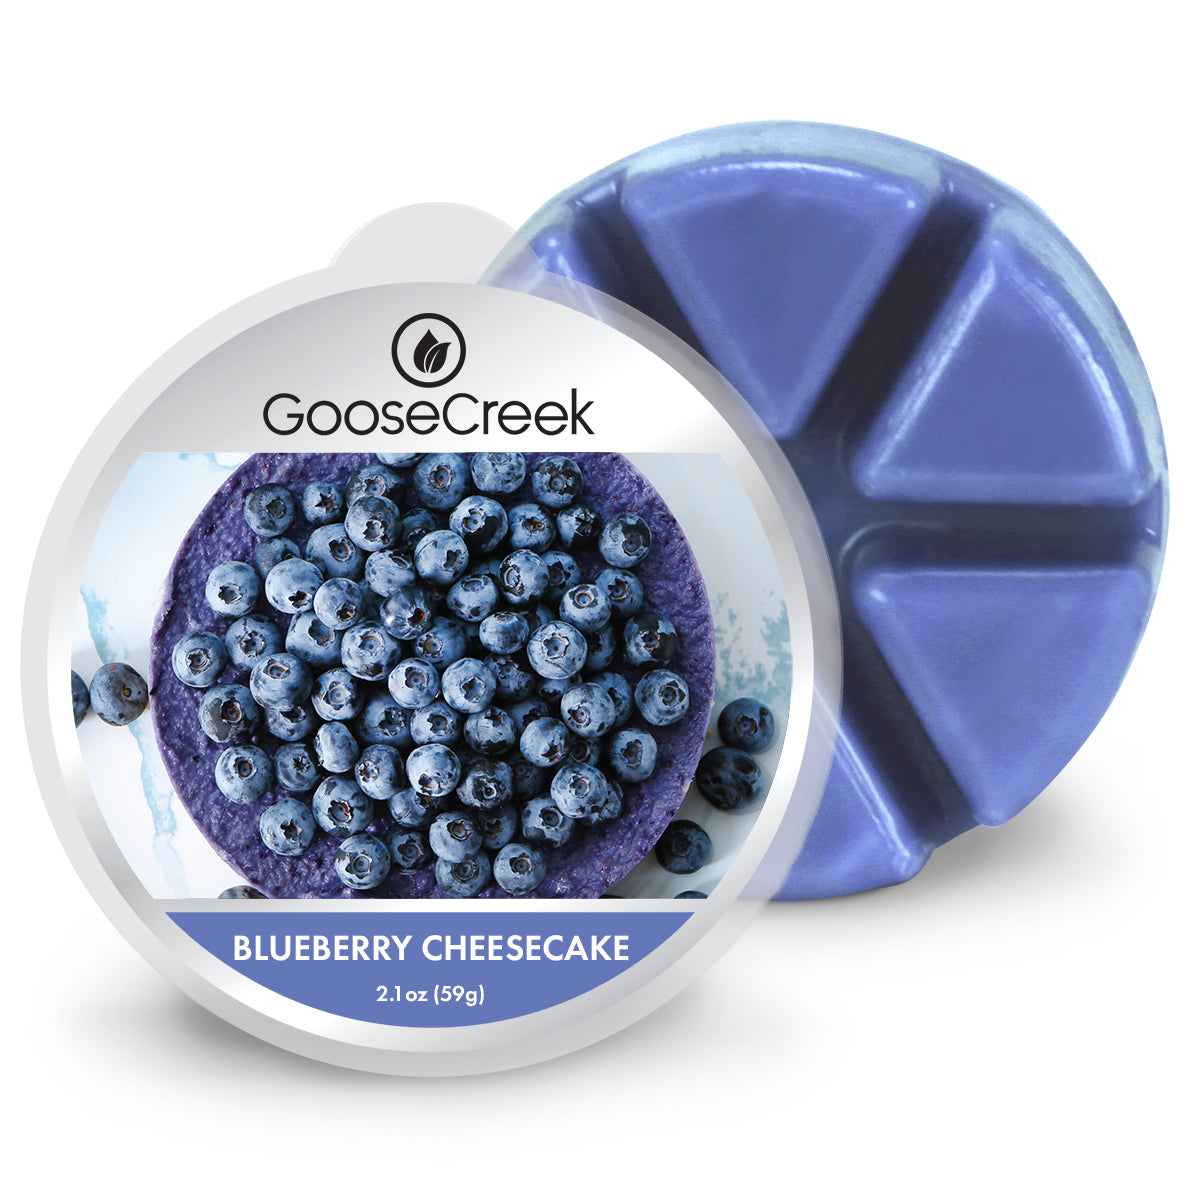 Blueberry Cheesecake Wax Melt